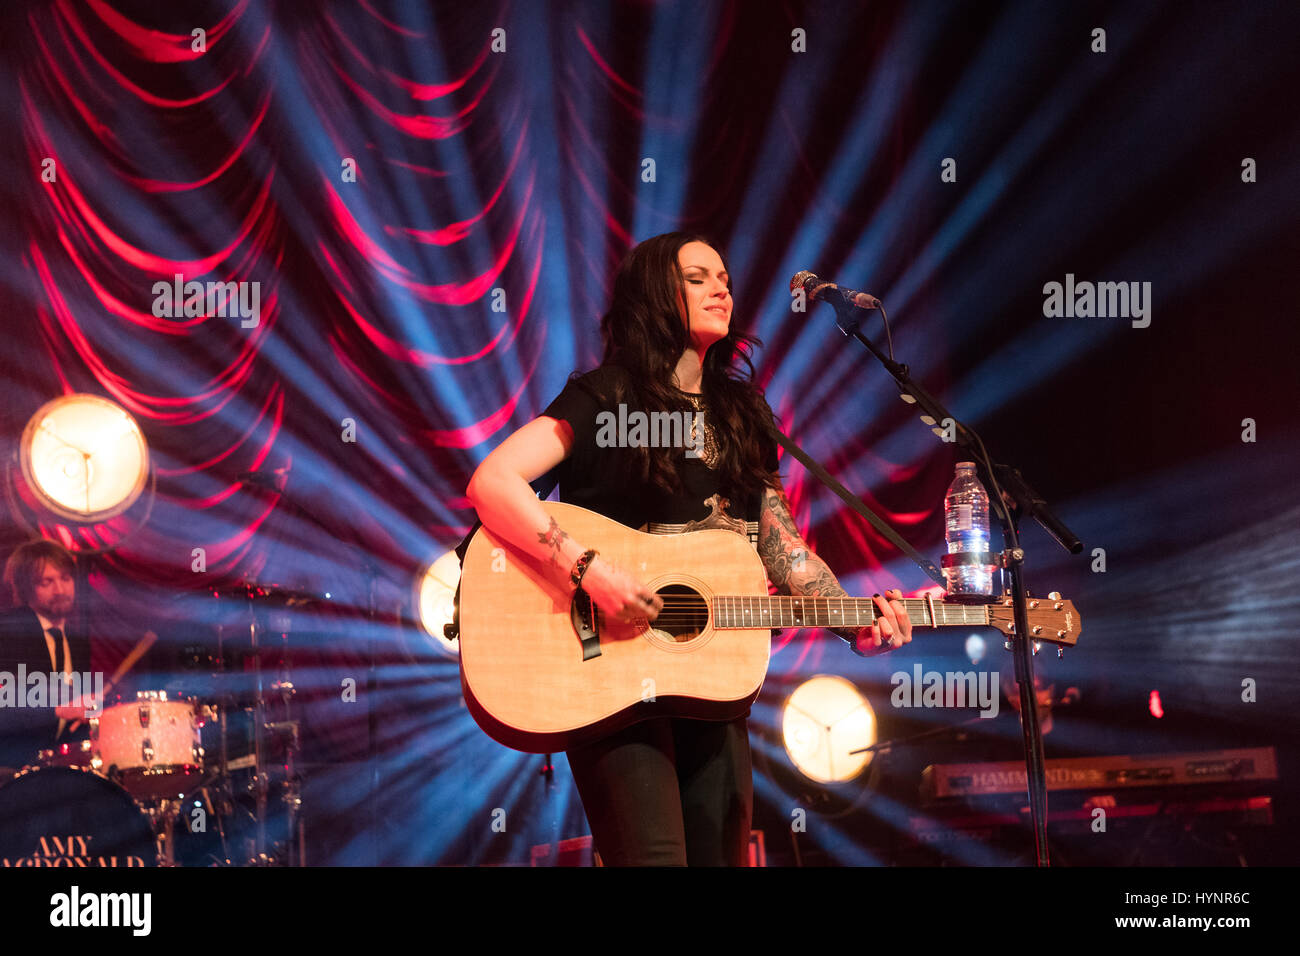 Edinburgh, UK. 5th April, 2017. Amy Macdonald performs on stage at Usher Hall in Edinburgh, UK. Roberto Ricciuti/Alamy Live News Stock Photo